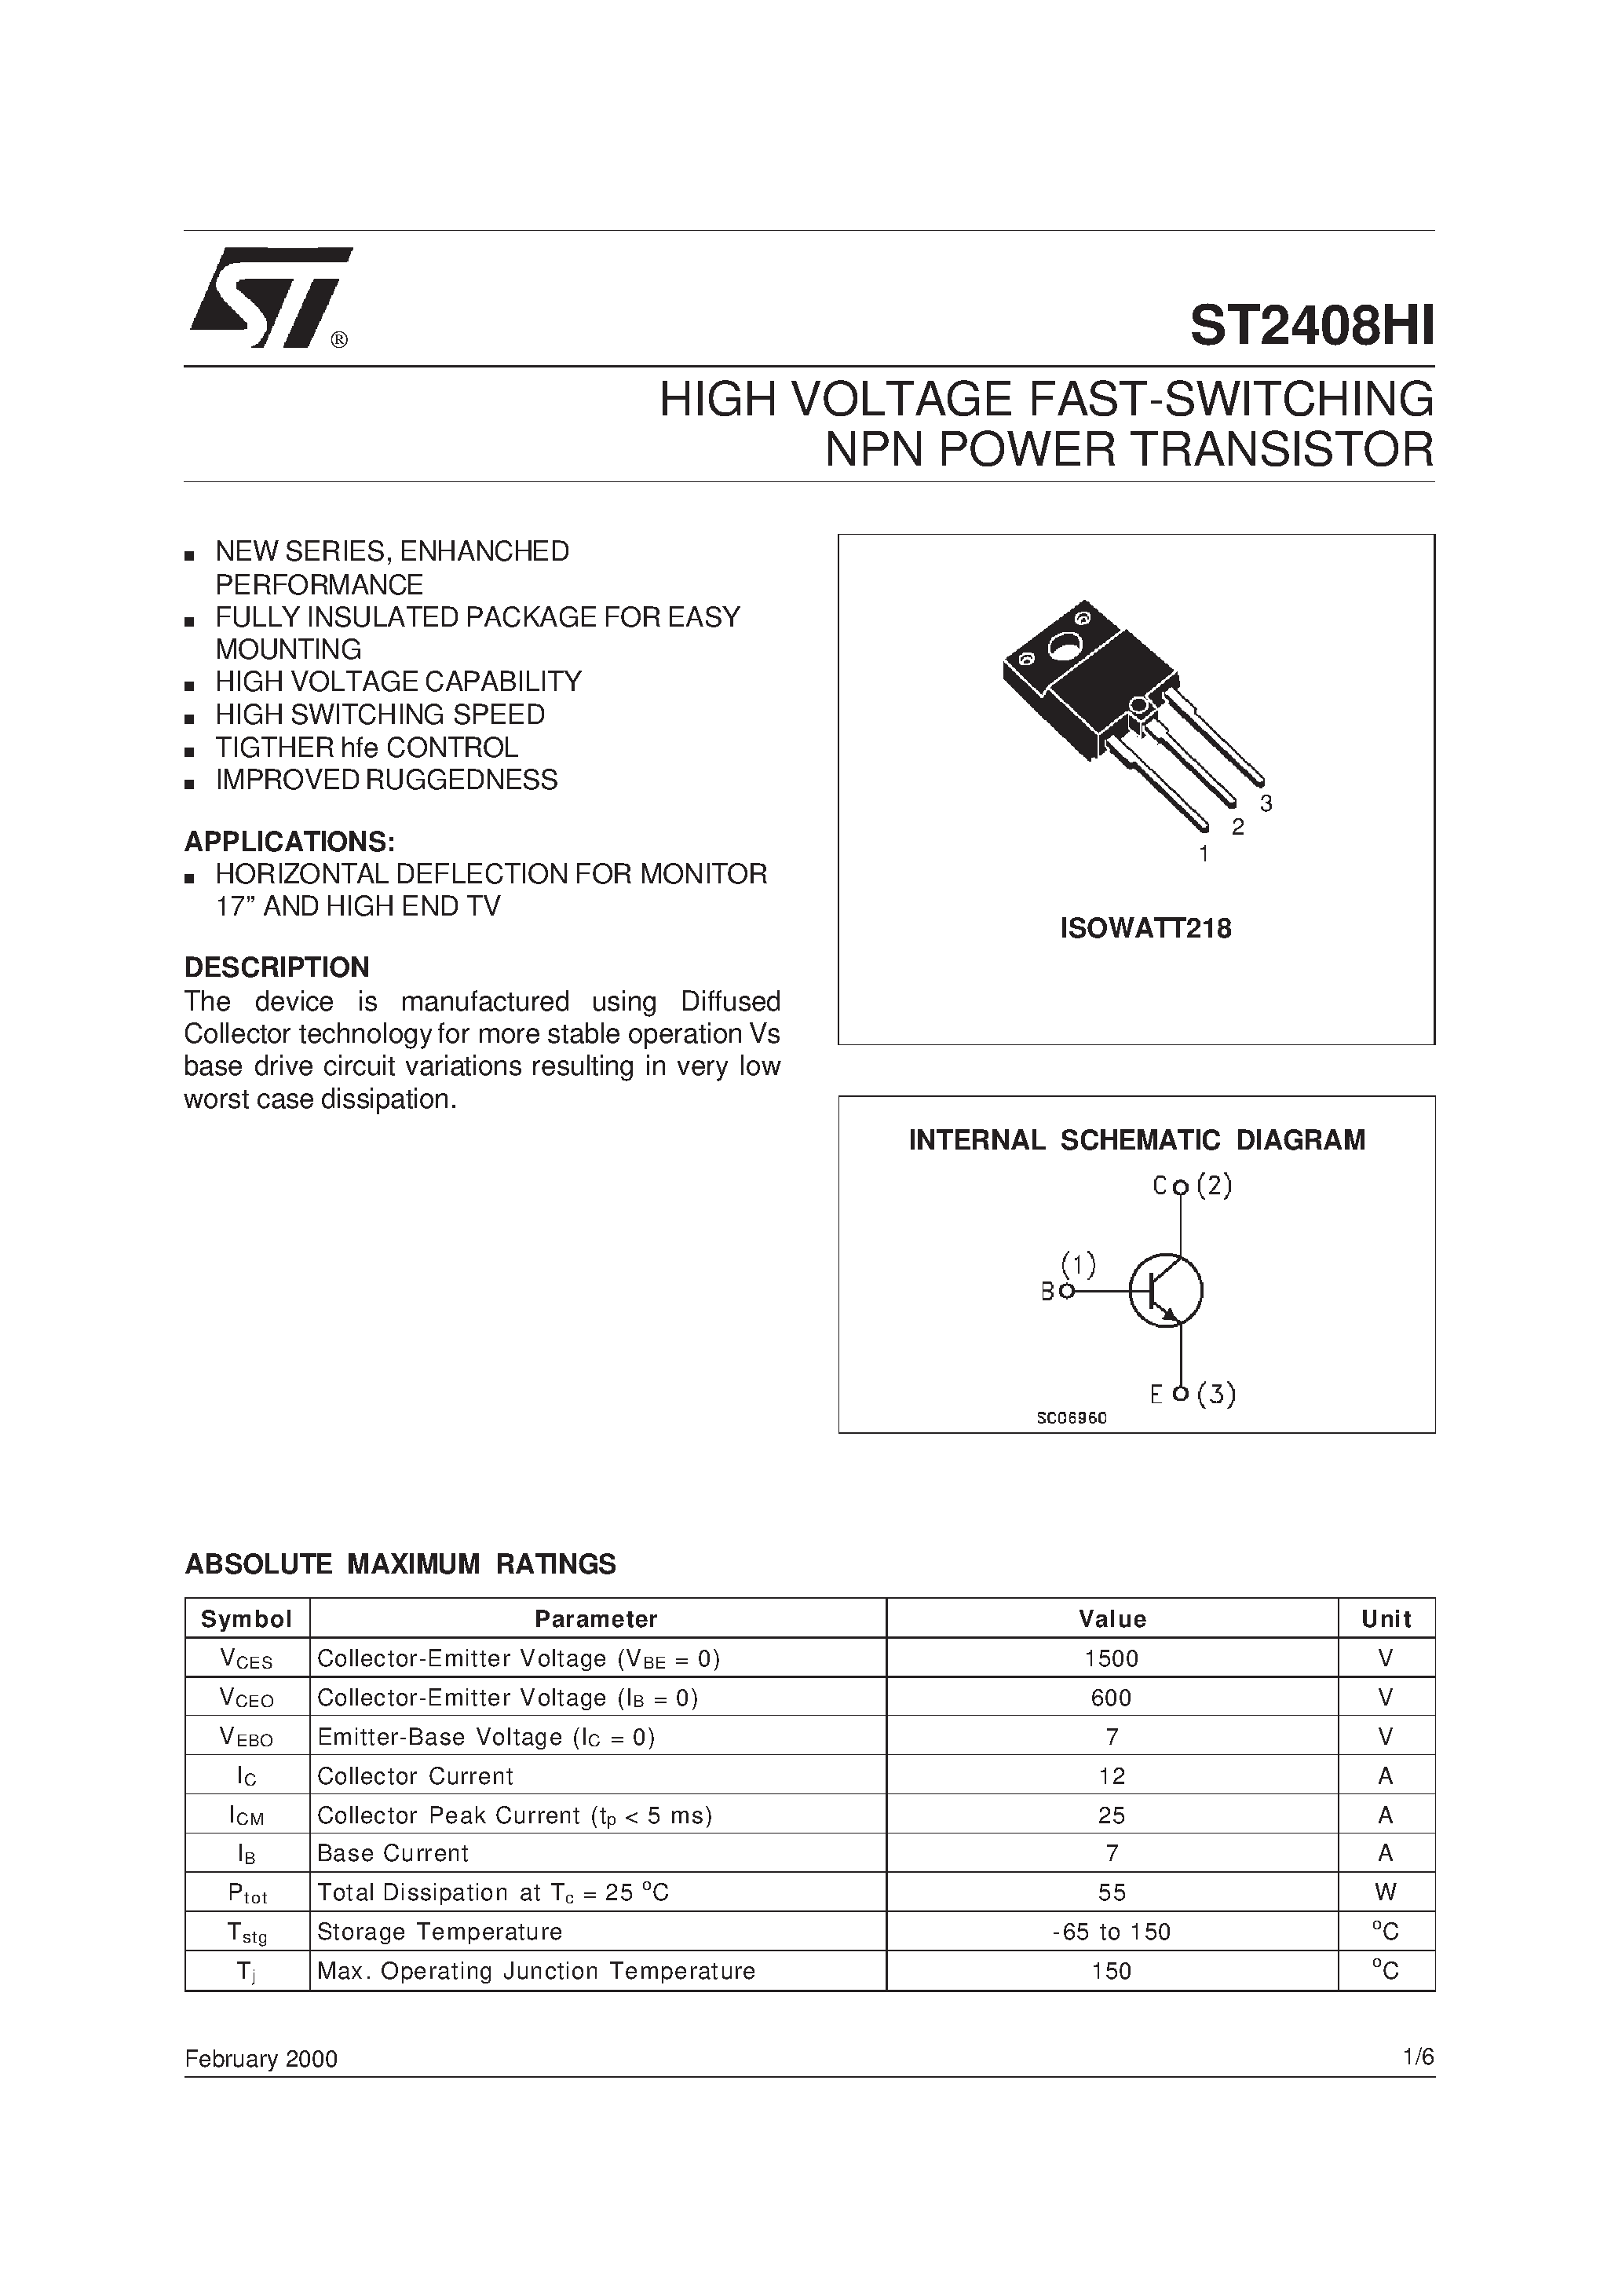 Datasheet ST2408HI - HIGH VOLTAGE FAST-SWITCHING NPN POWER TRANSISTOR page 1